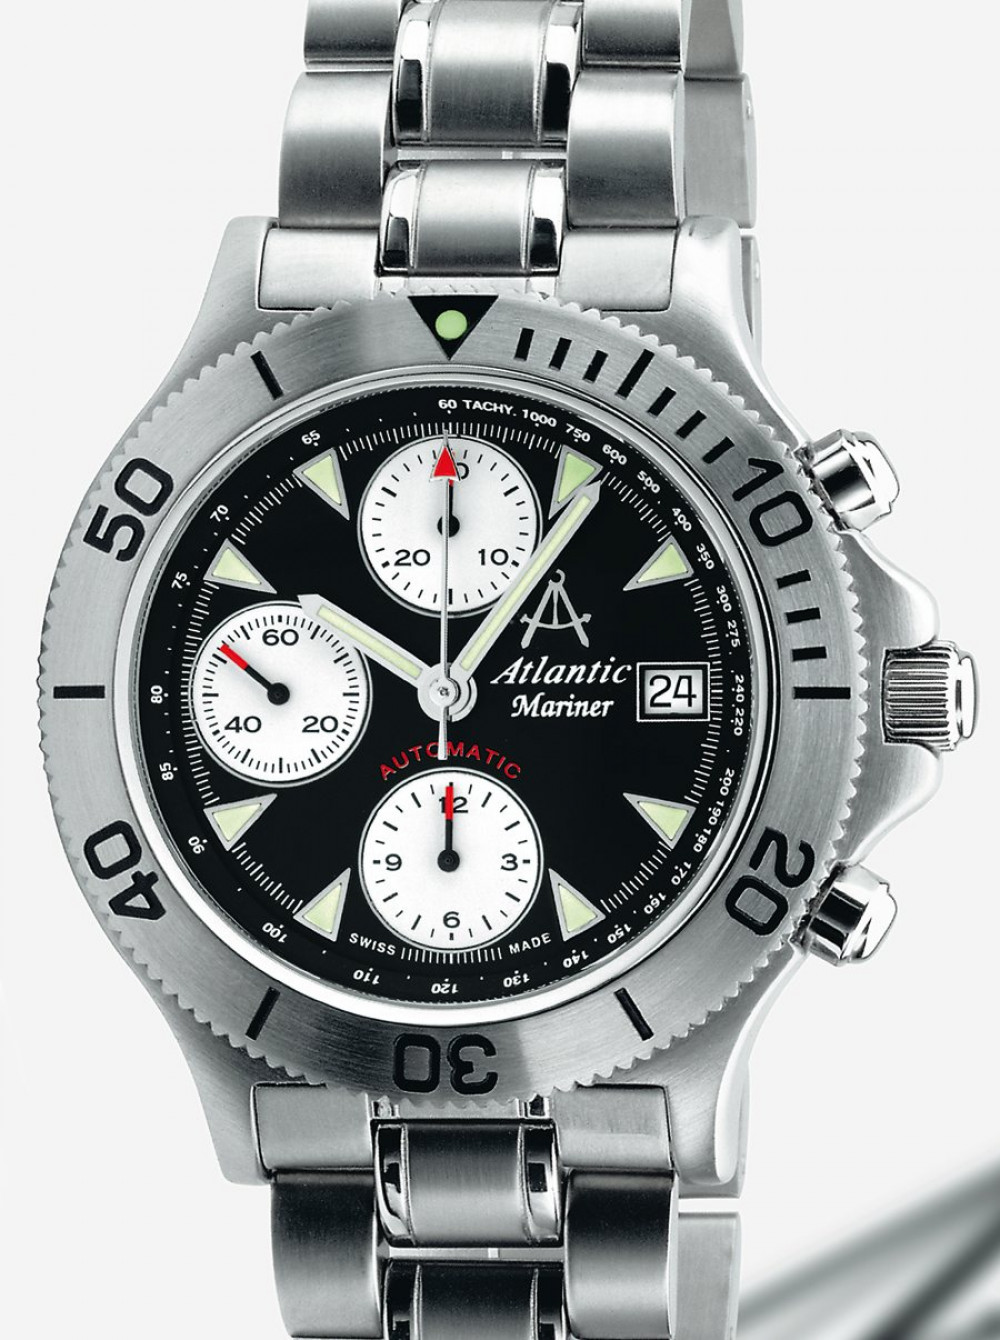 Zegarek firmy Atlantic, model Mariner Chrono Automatik